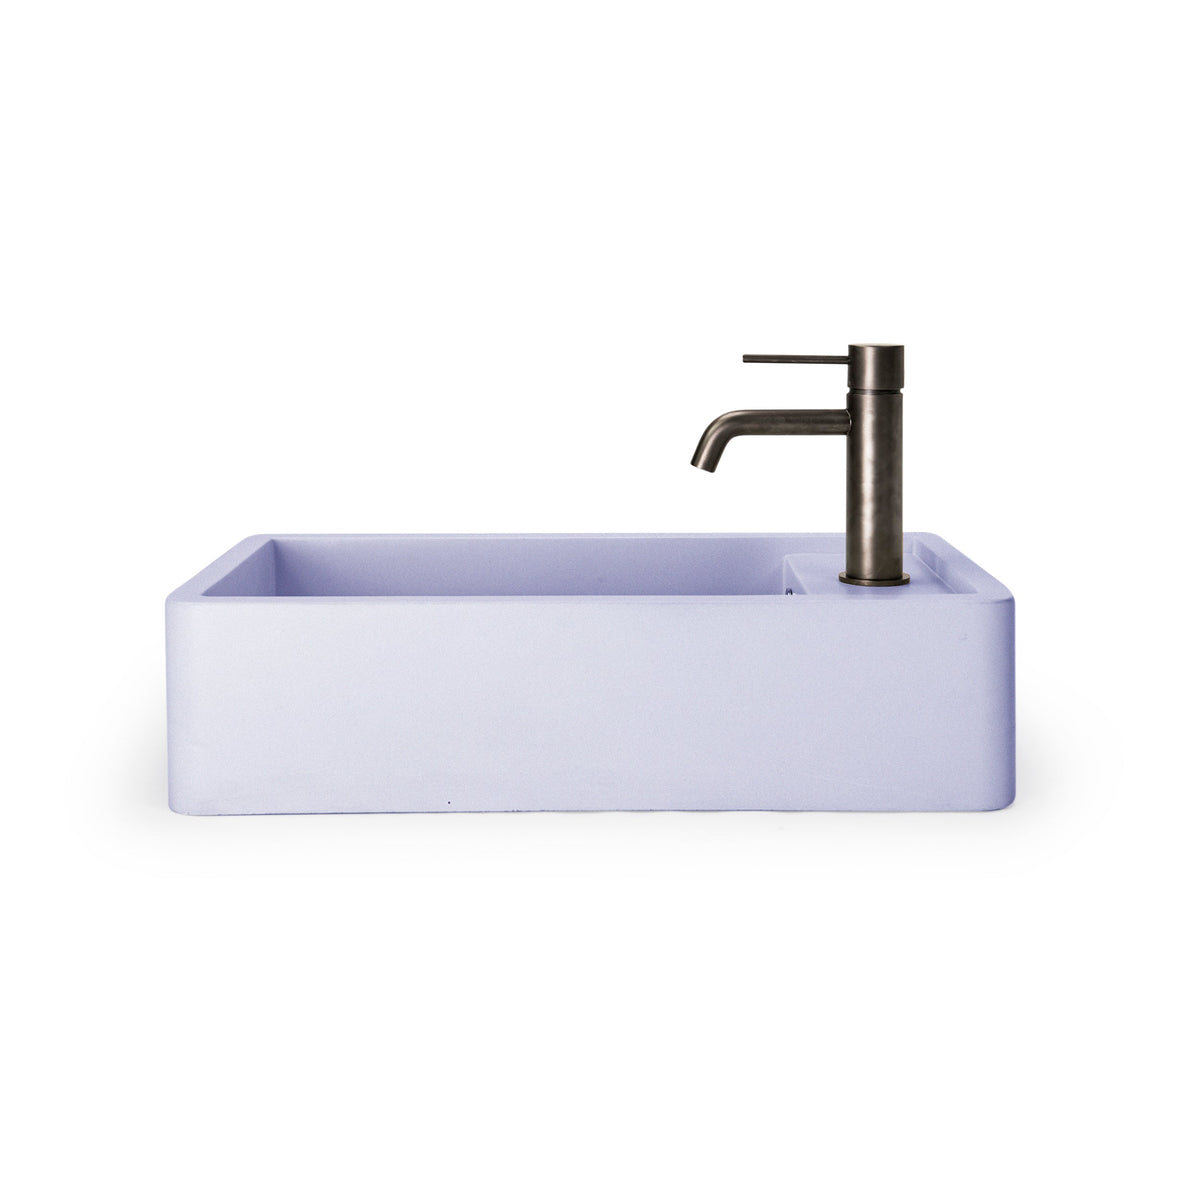 Shelf 01 Basin - Wall Hung (Lilac)